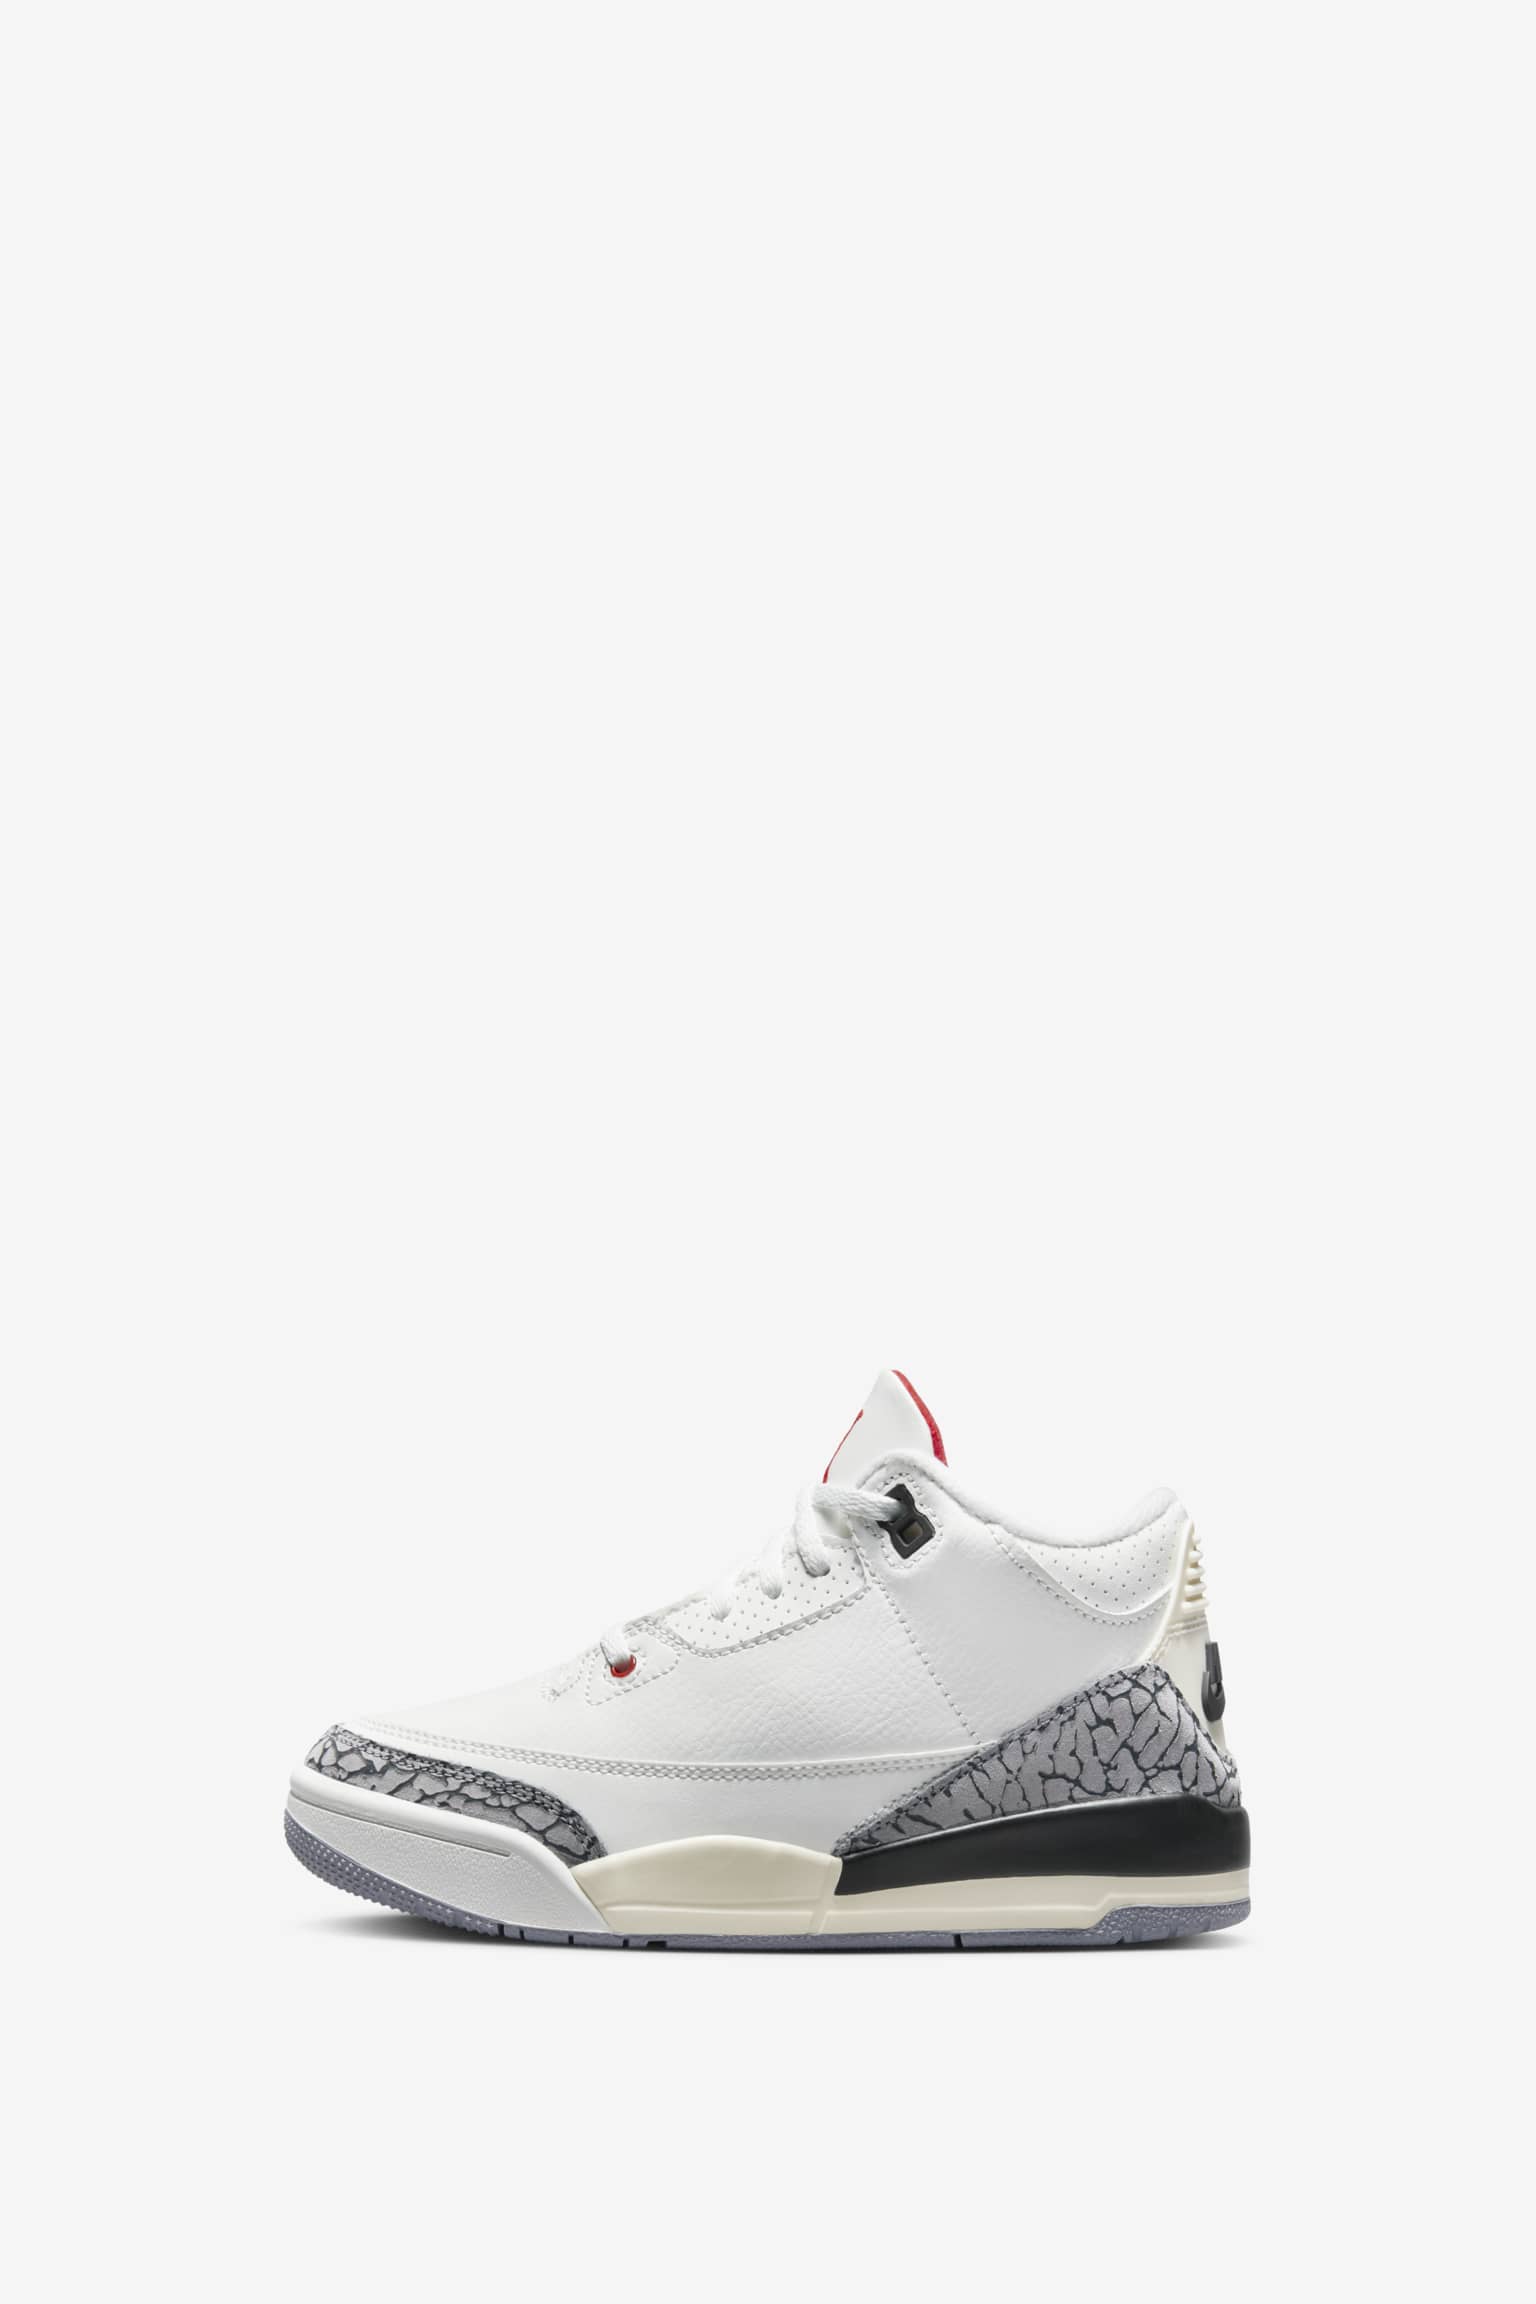 新品Nike Air Jordan 3 Retro White Cement